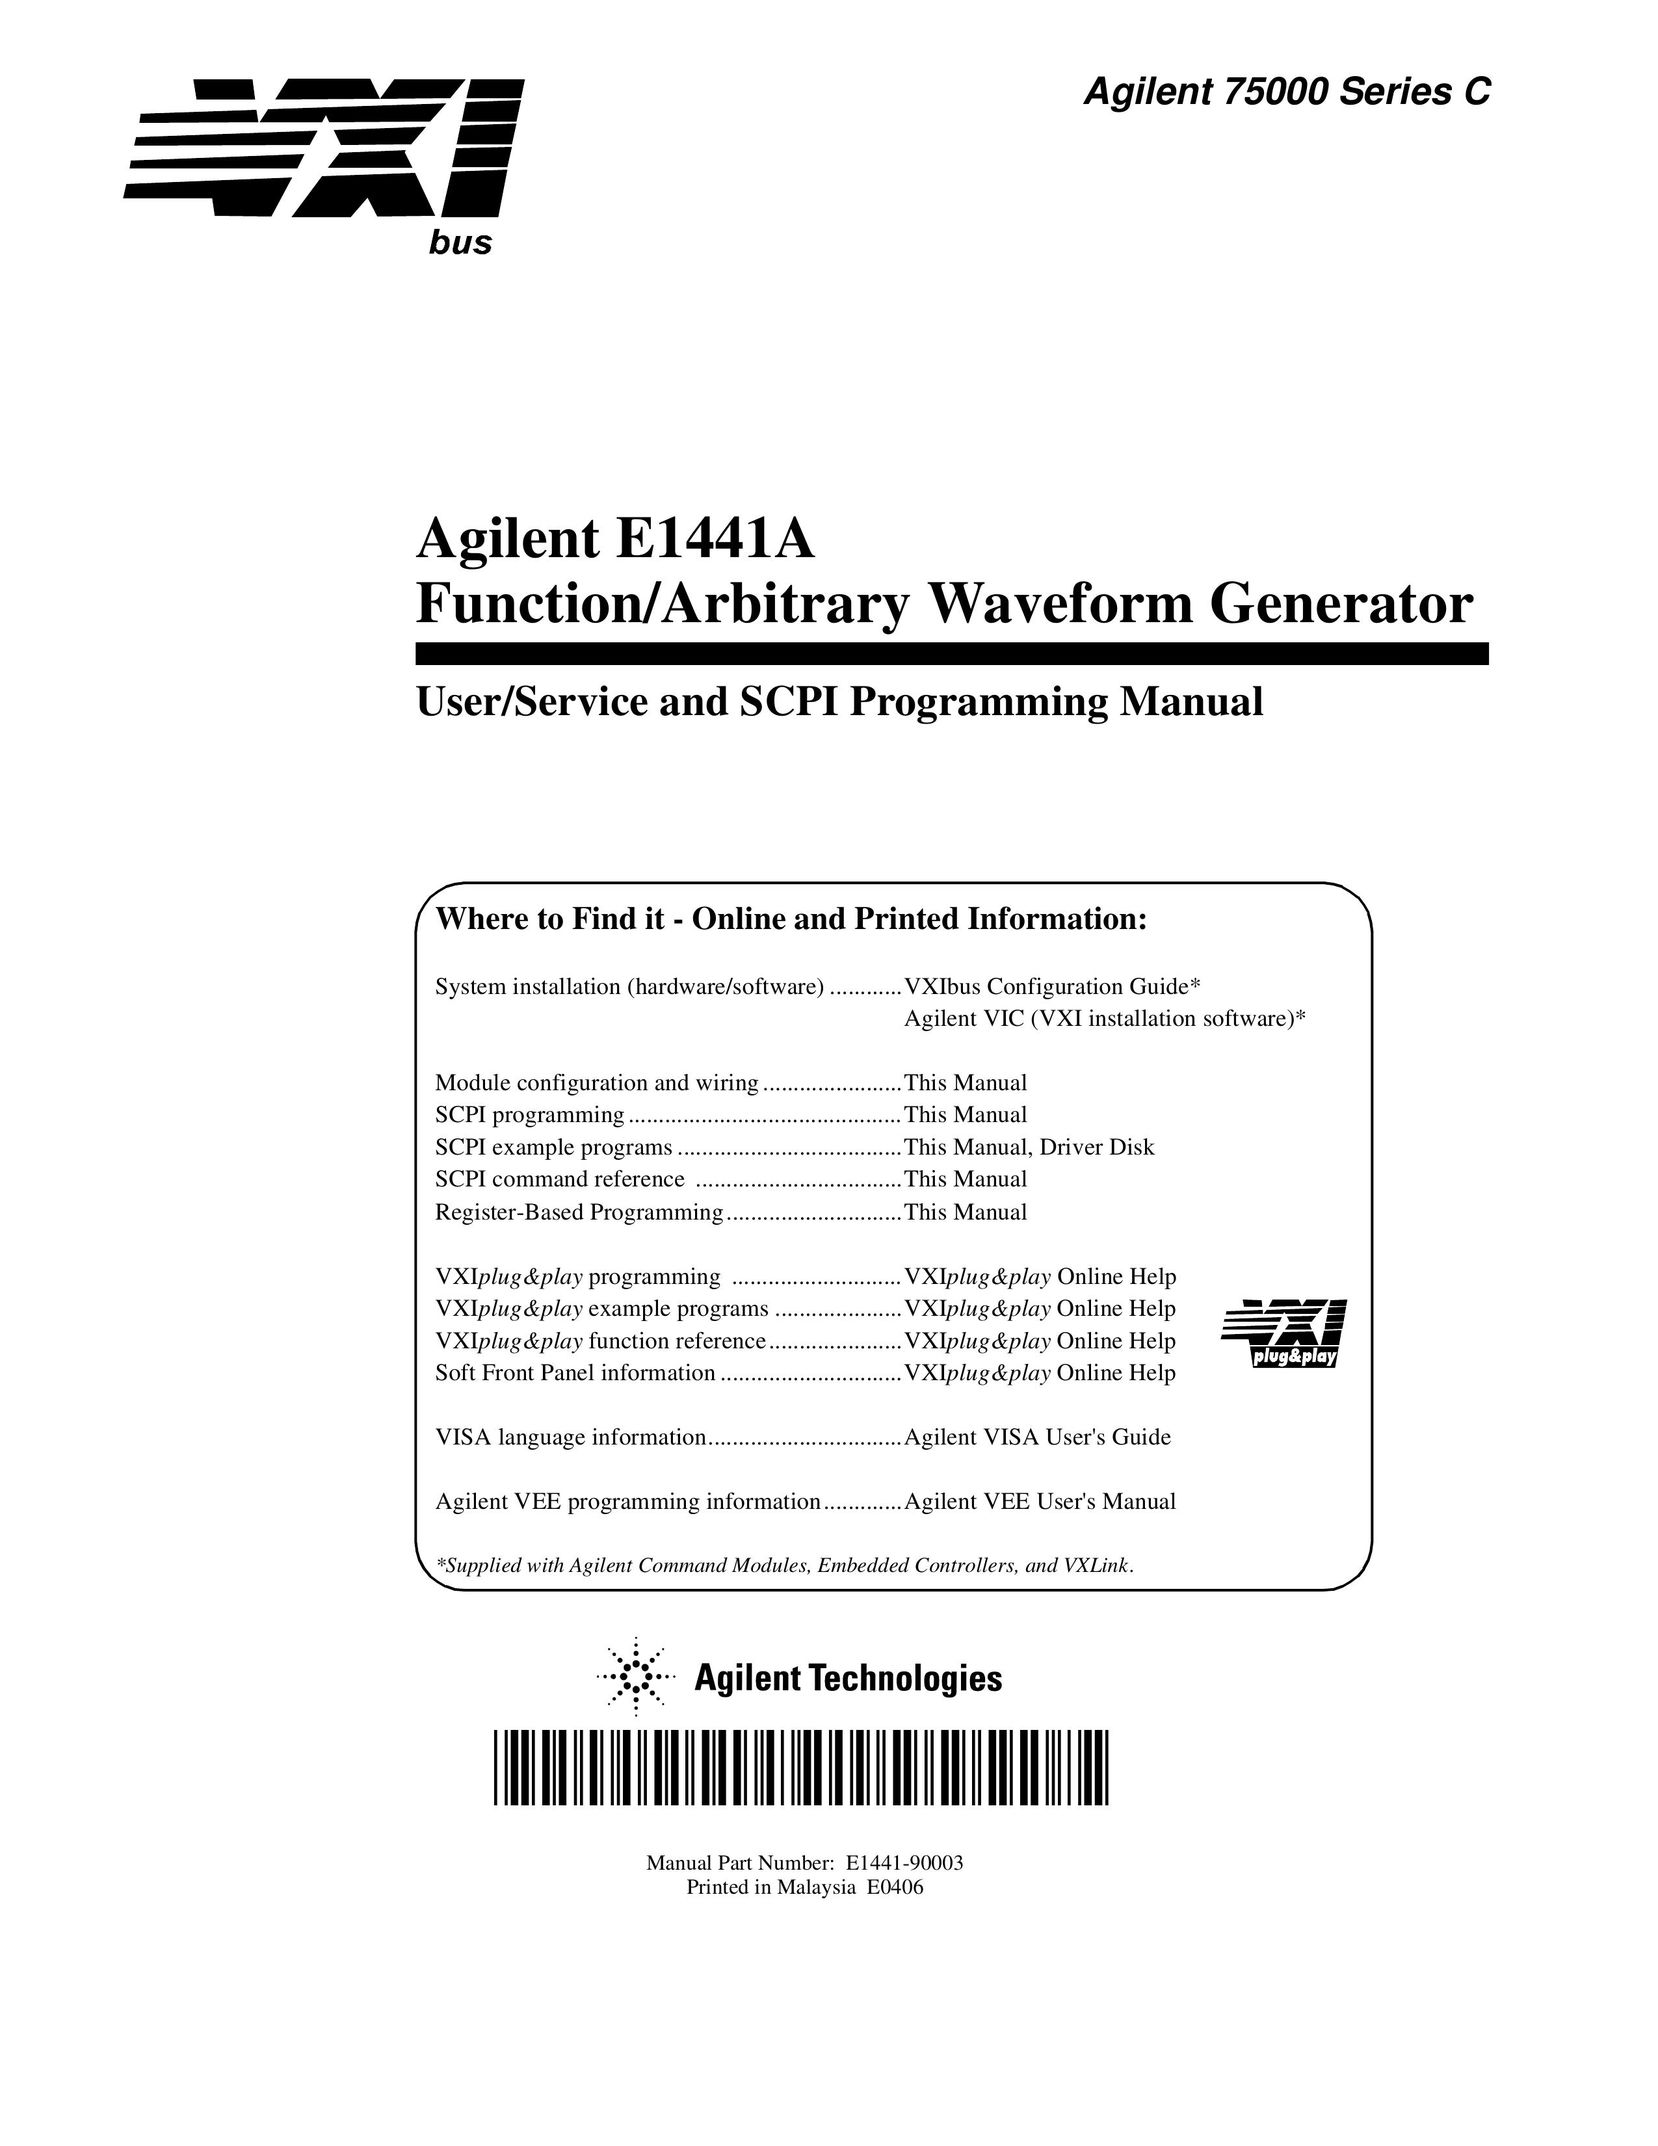 Agilent Technologies E1441A Oven User Manual